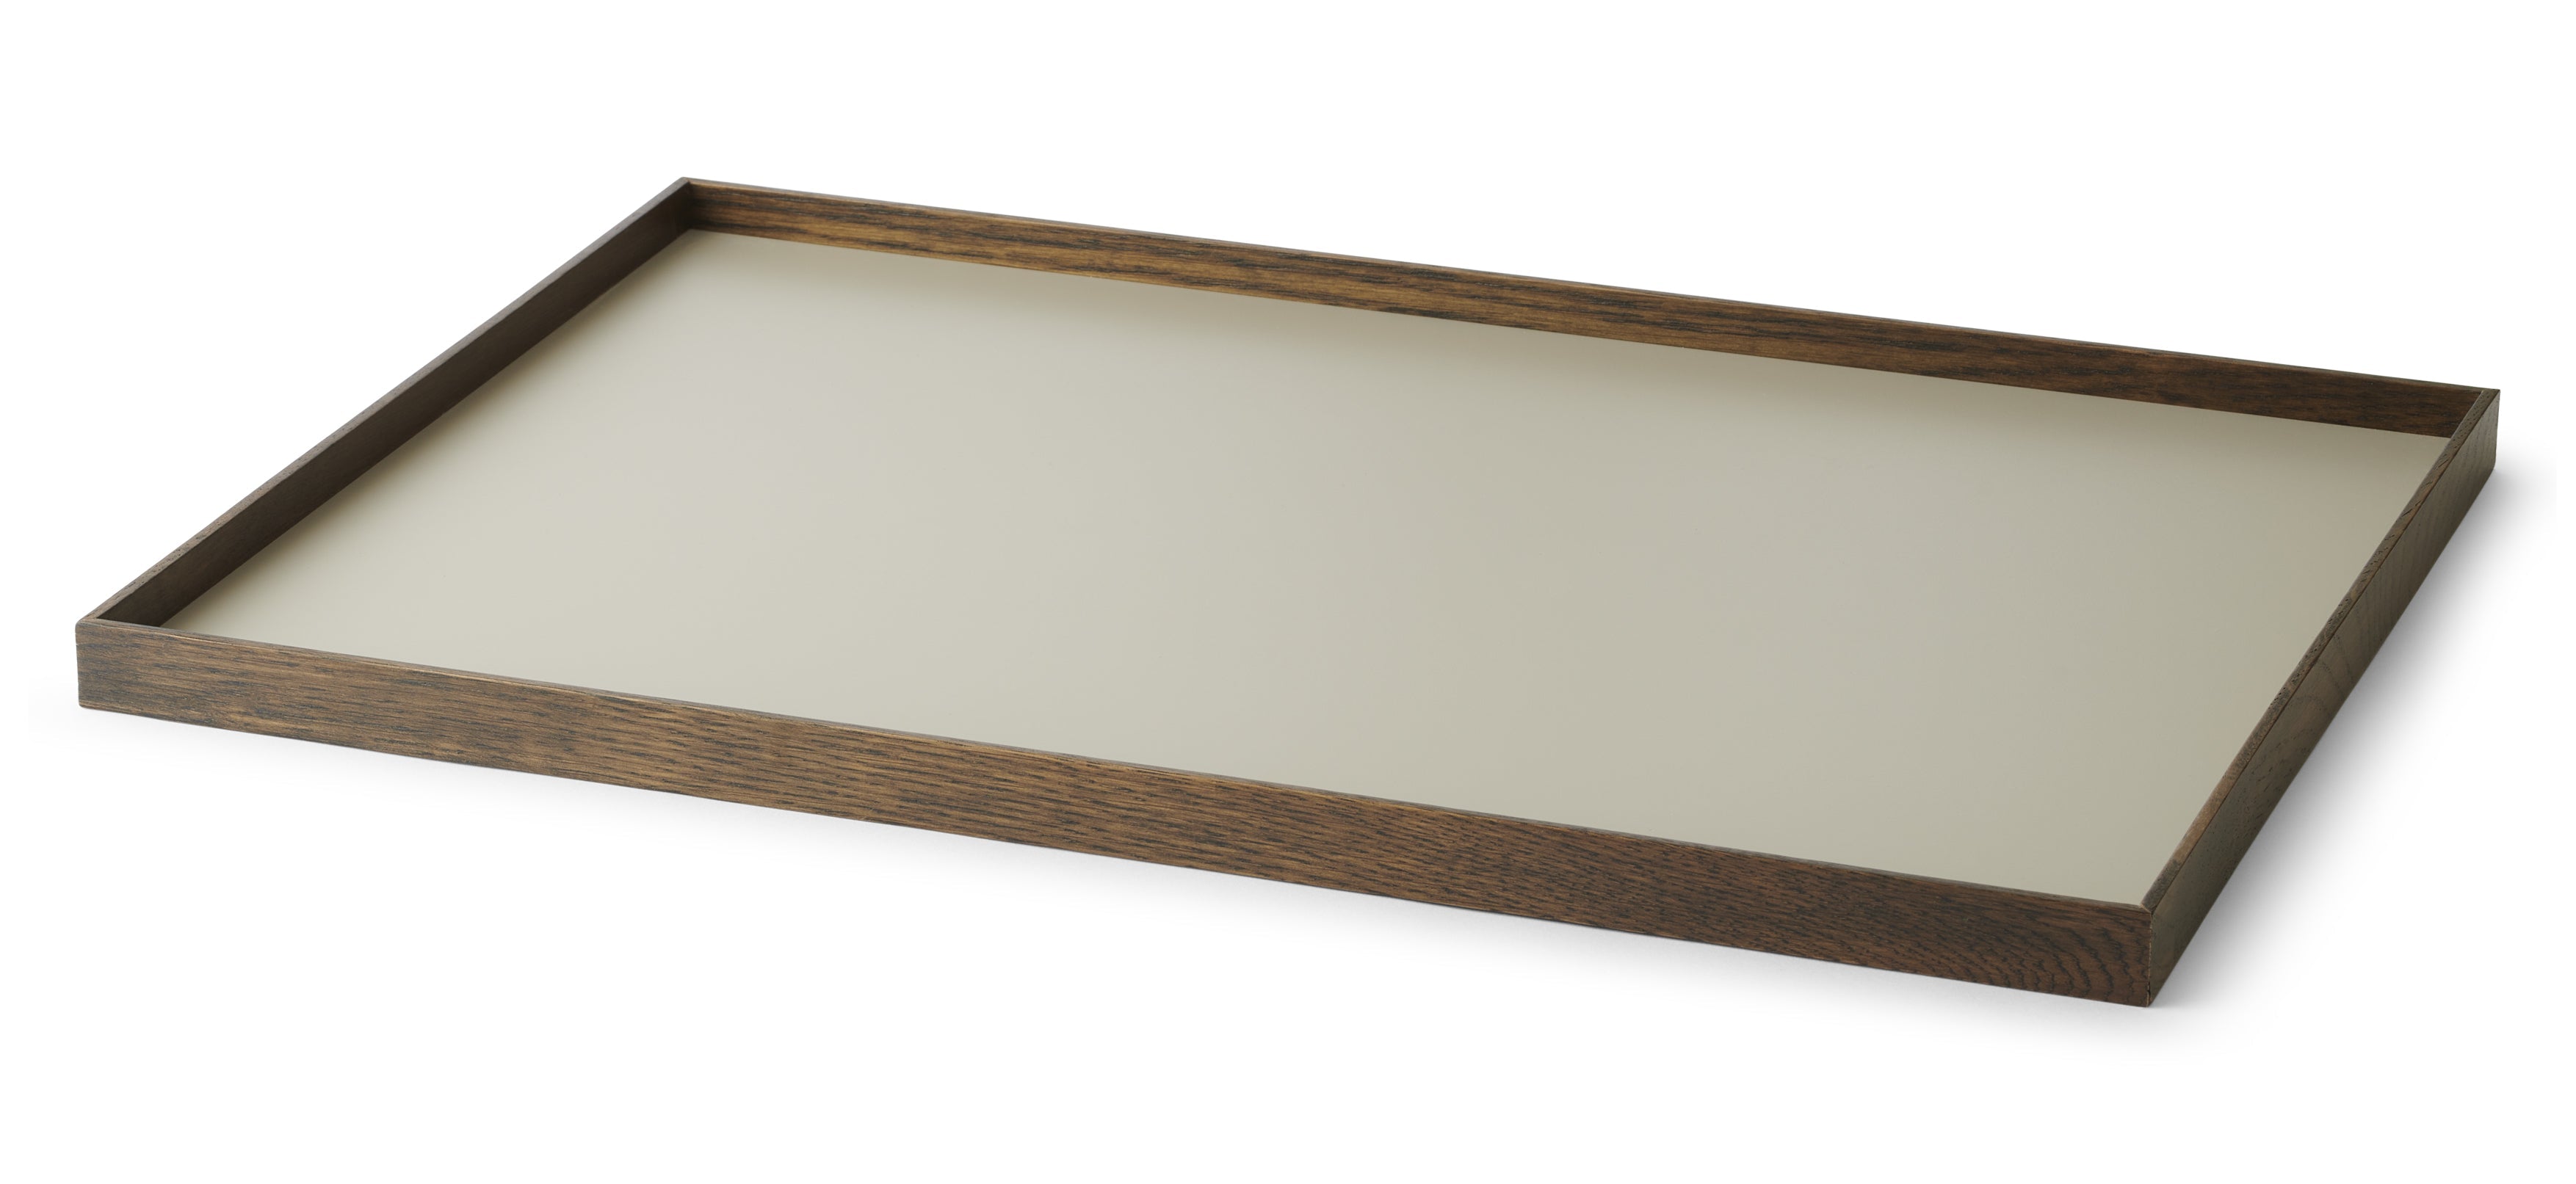 Gejst Frame Tray Smoked Oak/Grey, Large